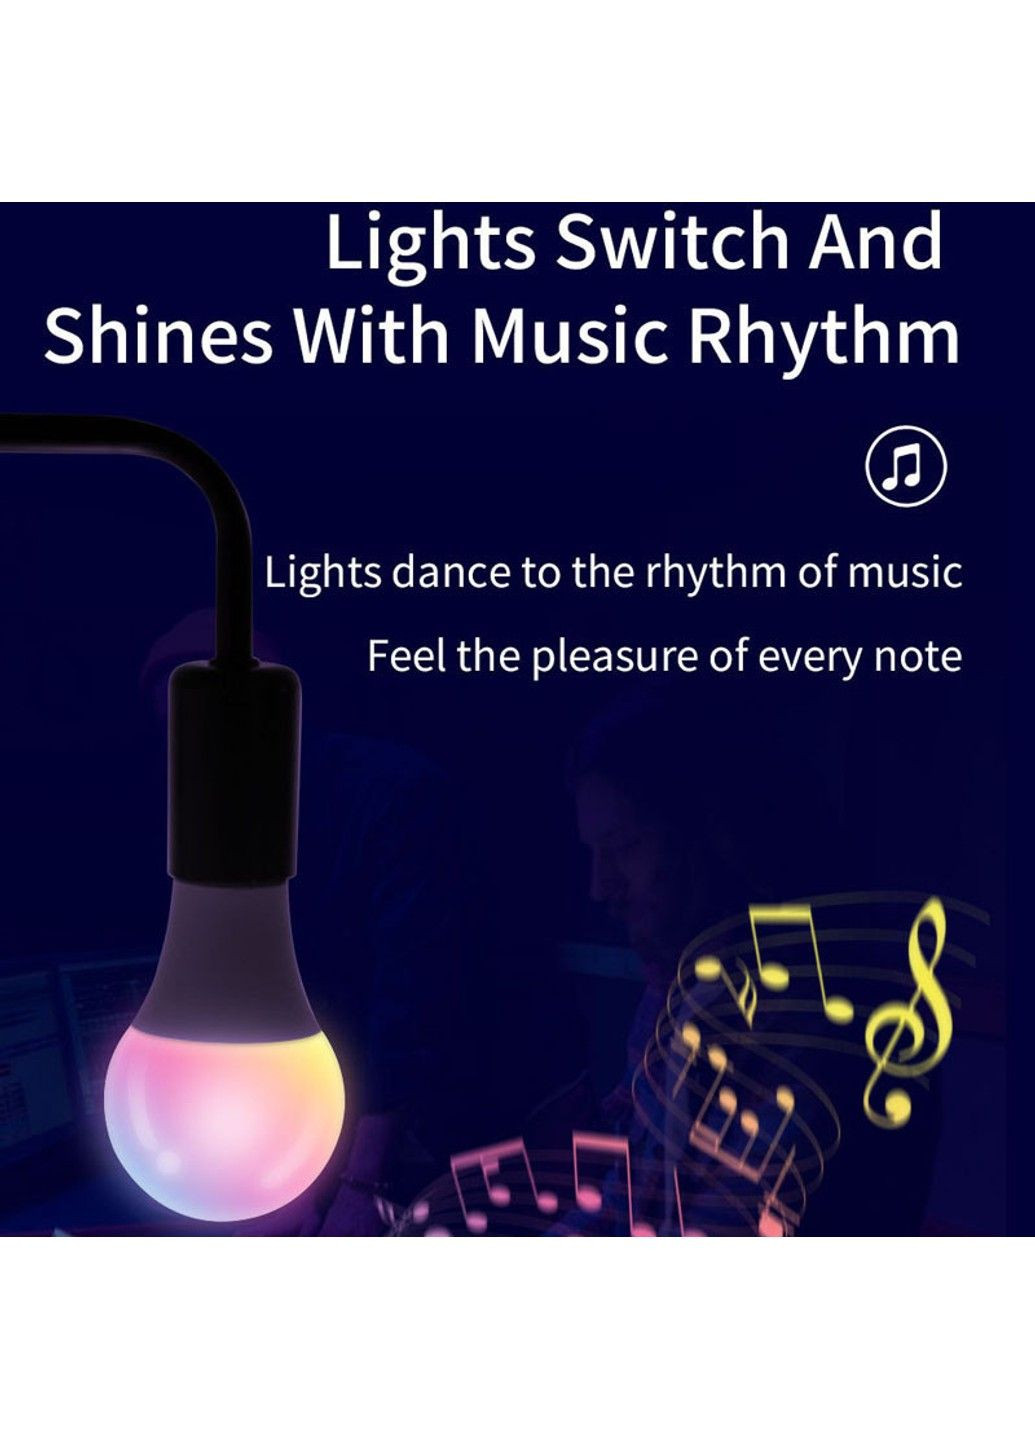 Светодиодная RGB лампочка Smart bulb light 4pcs with Bluetooth E27 with app Epik (294207337)